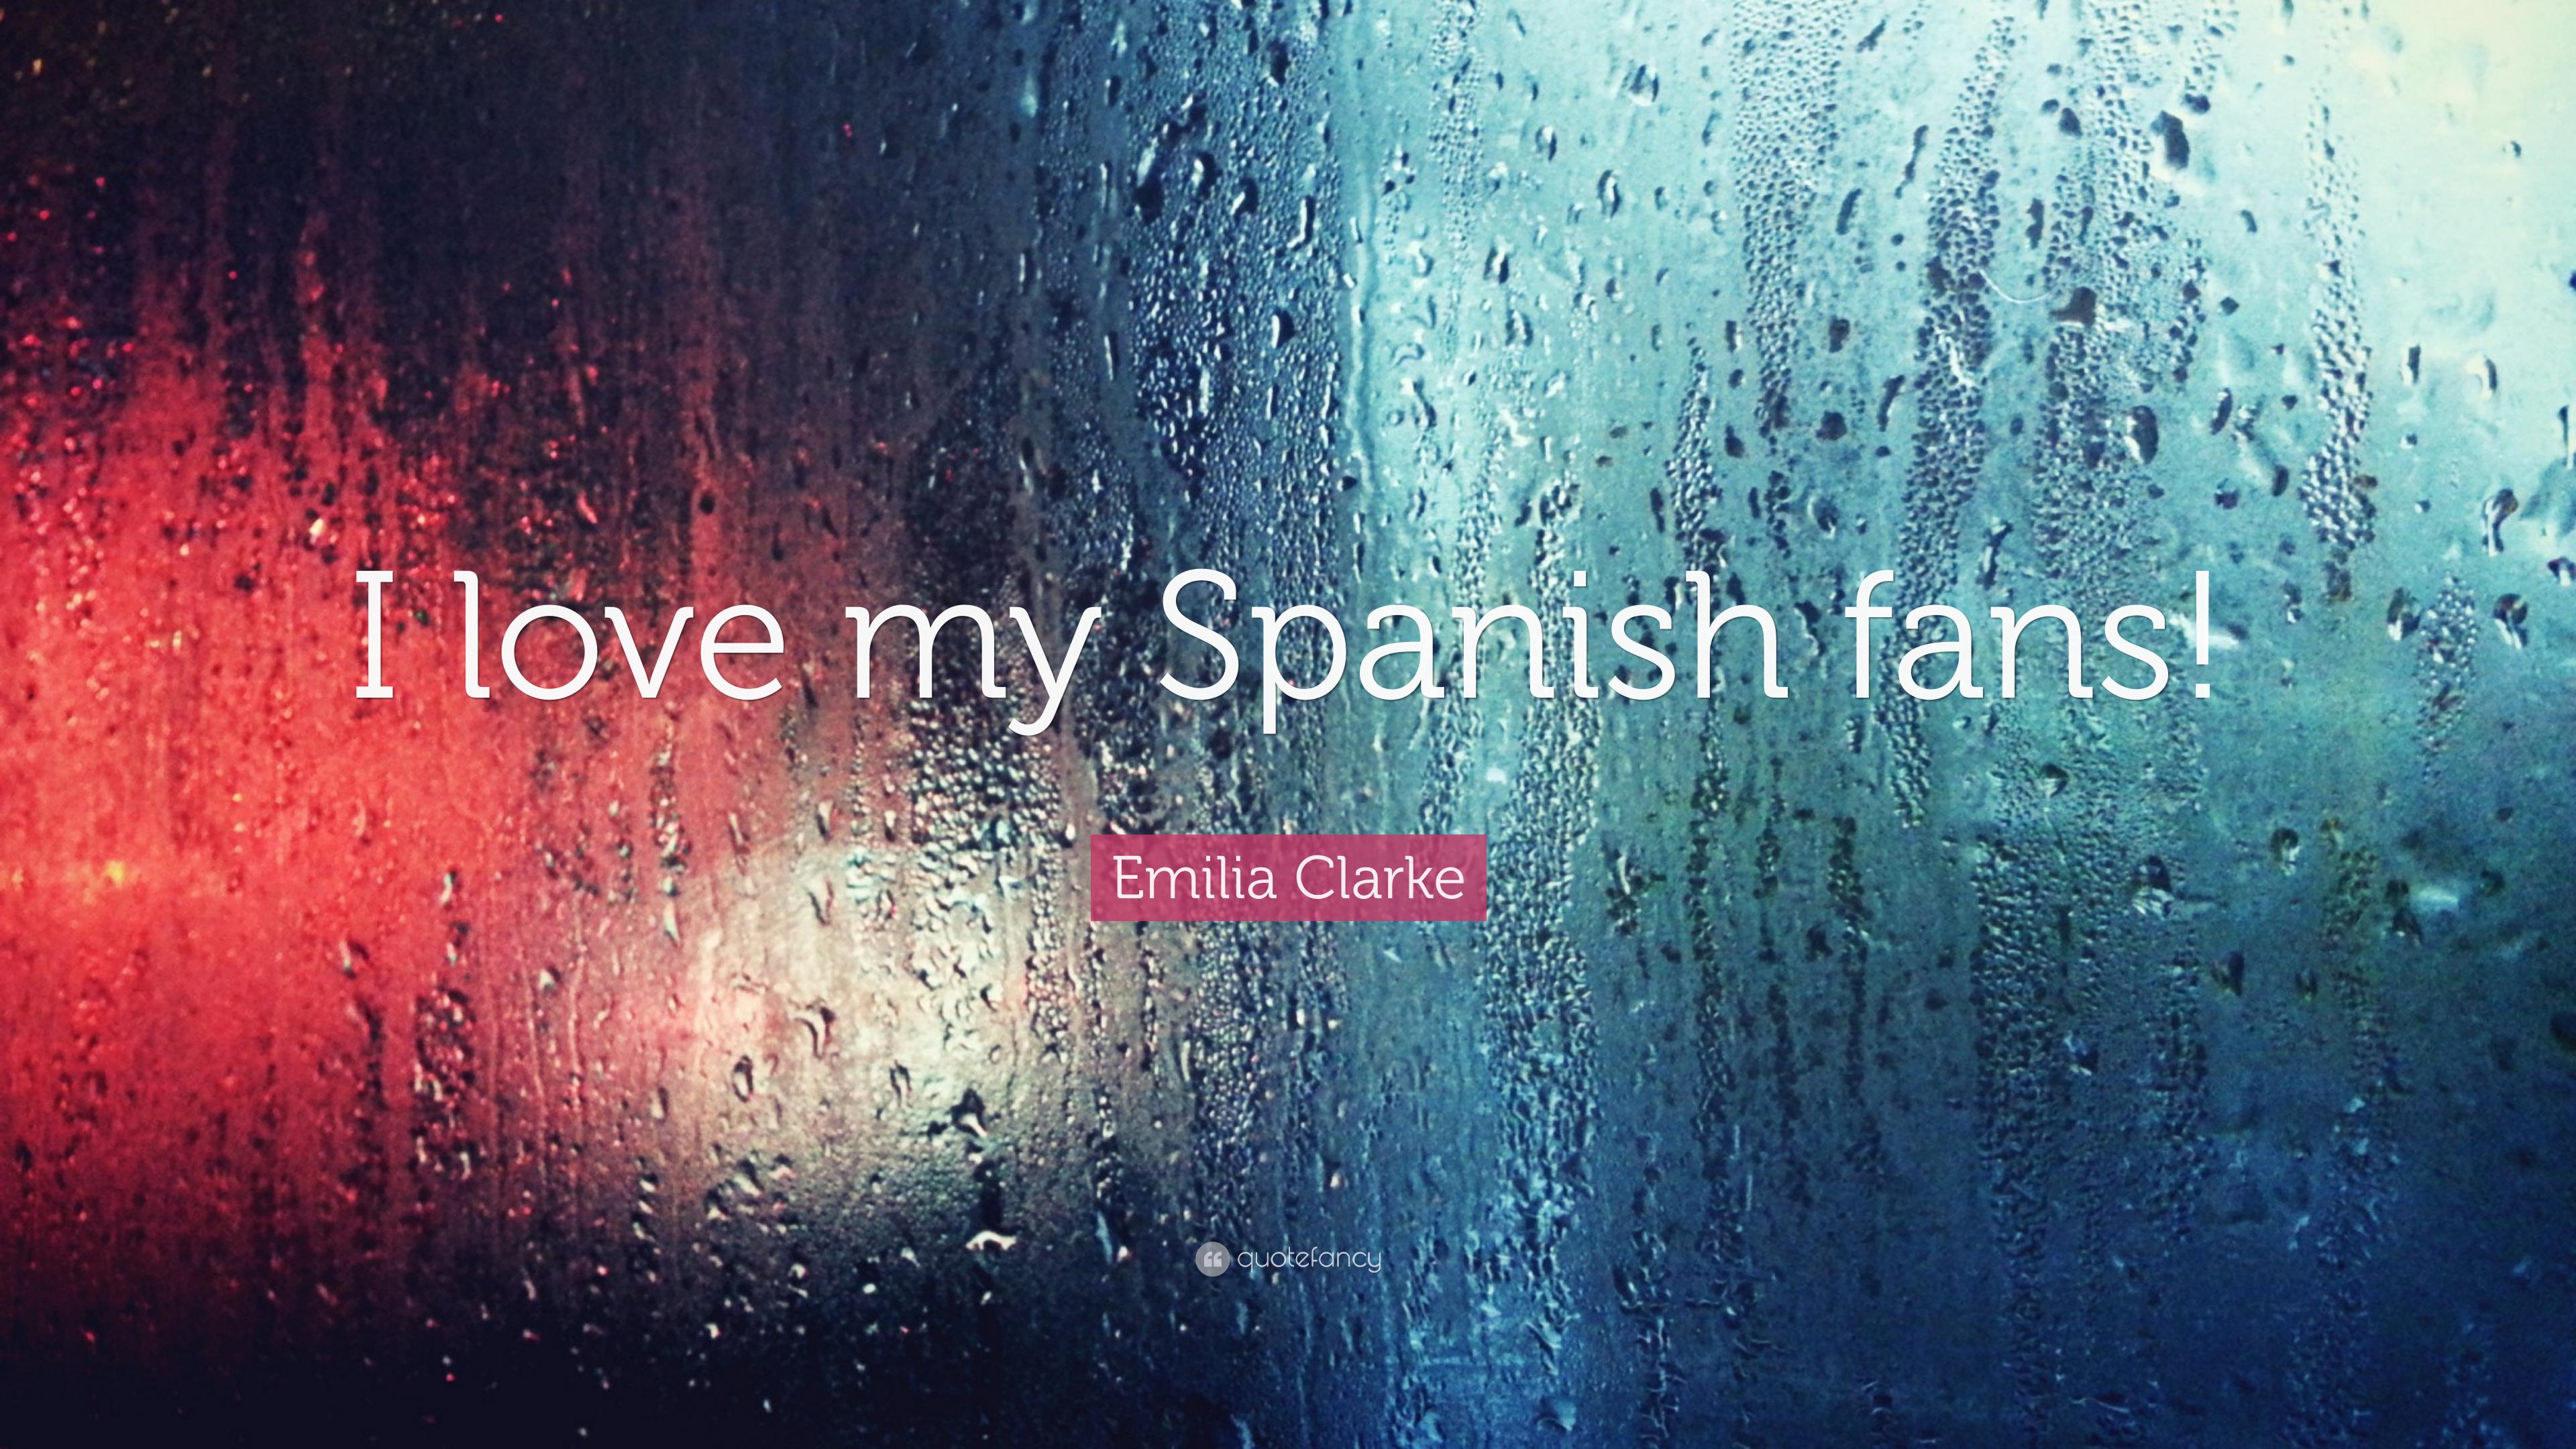 Emilia Clarke Quote: “I love my Spanish fans!” 10 wallpaper